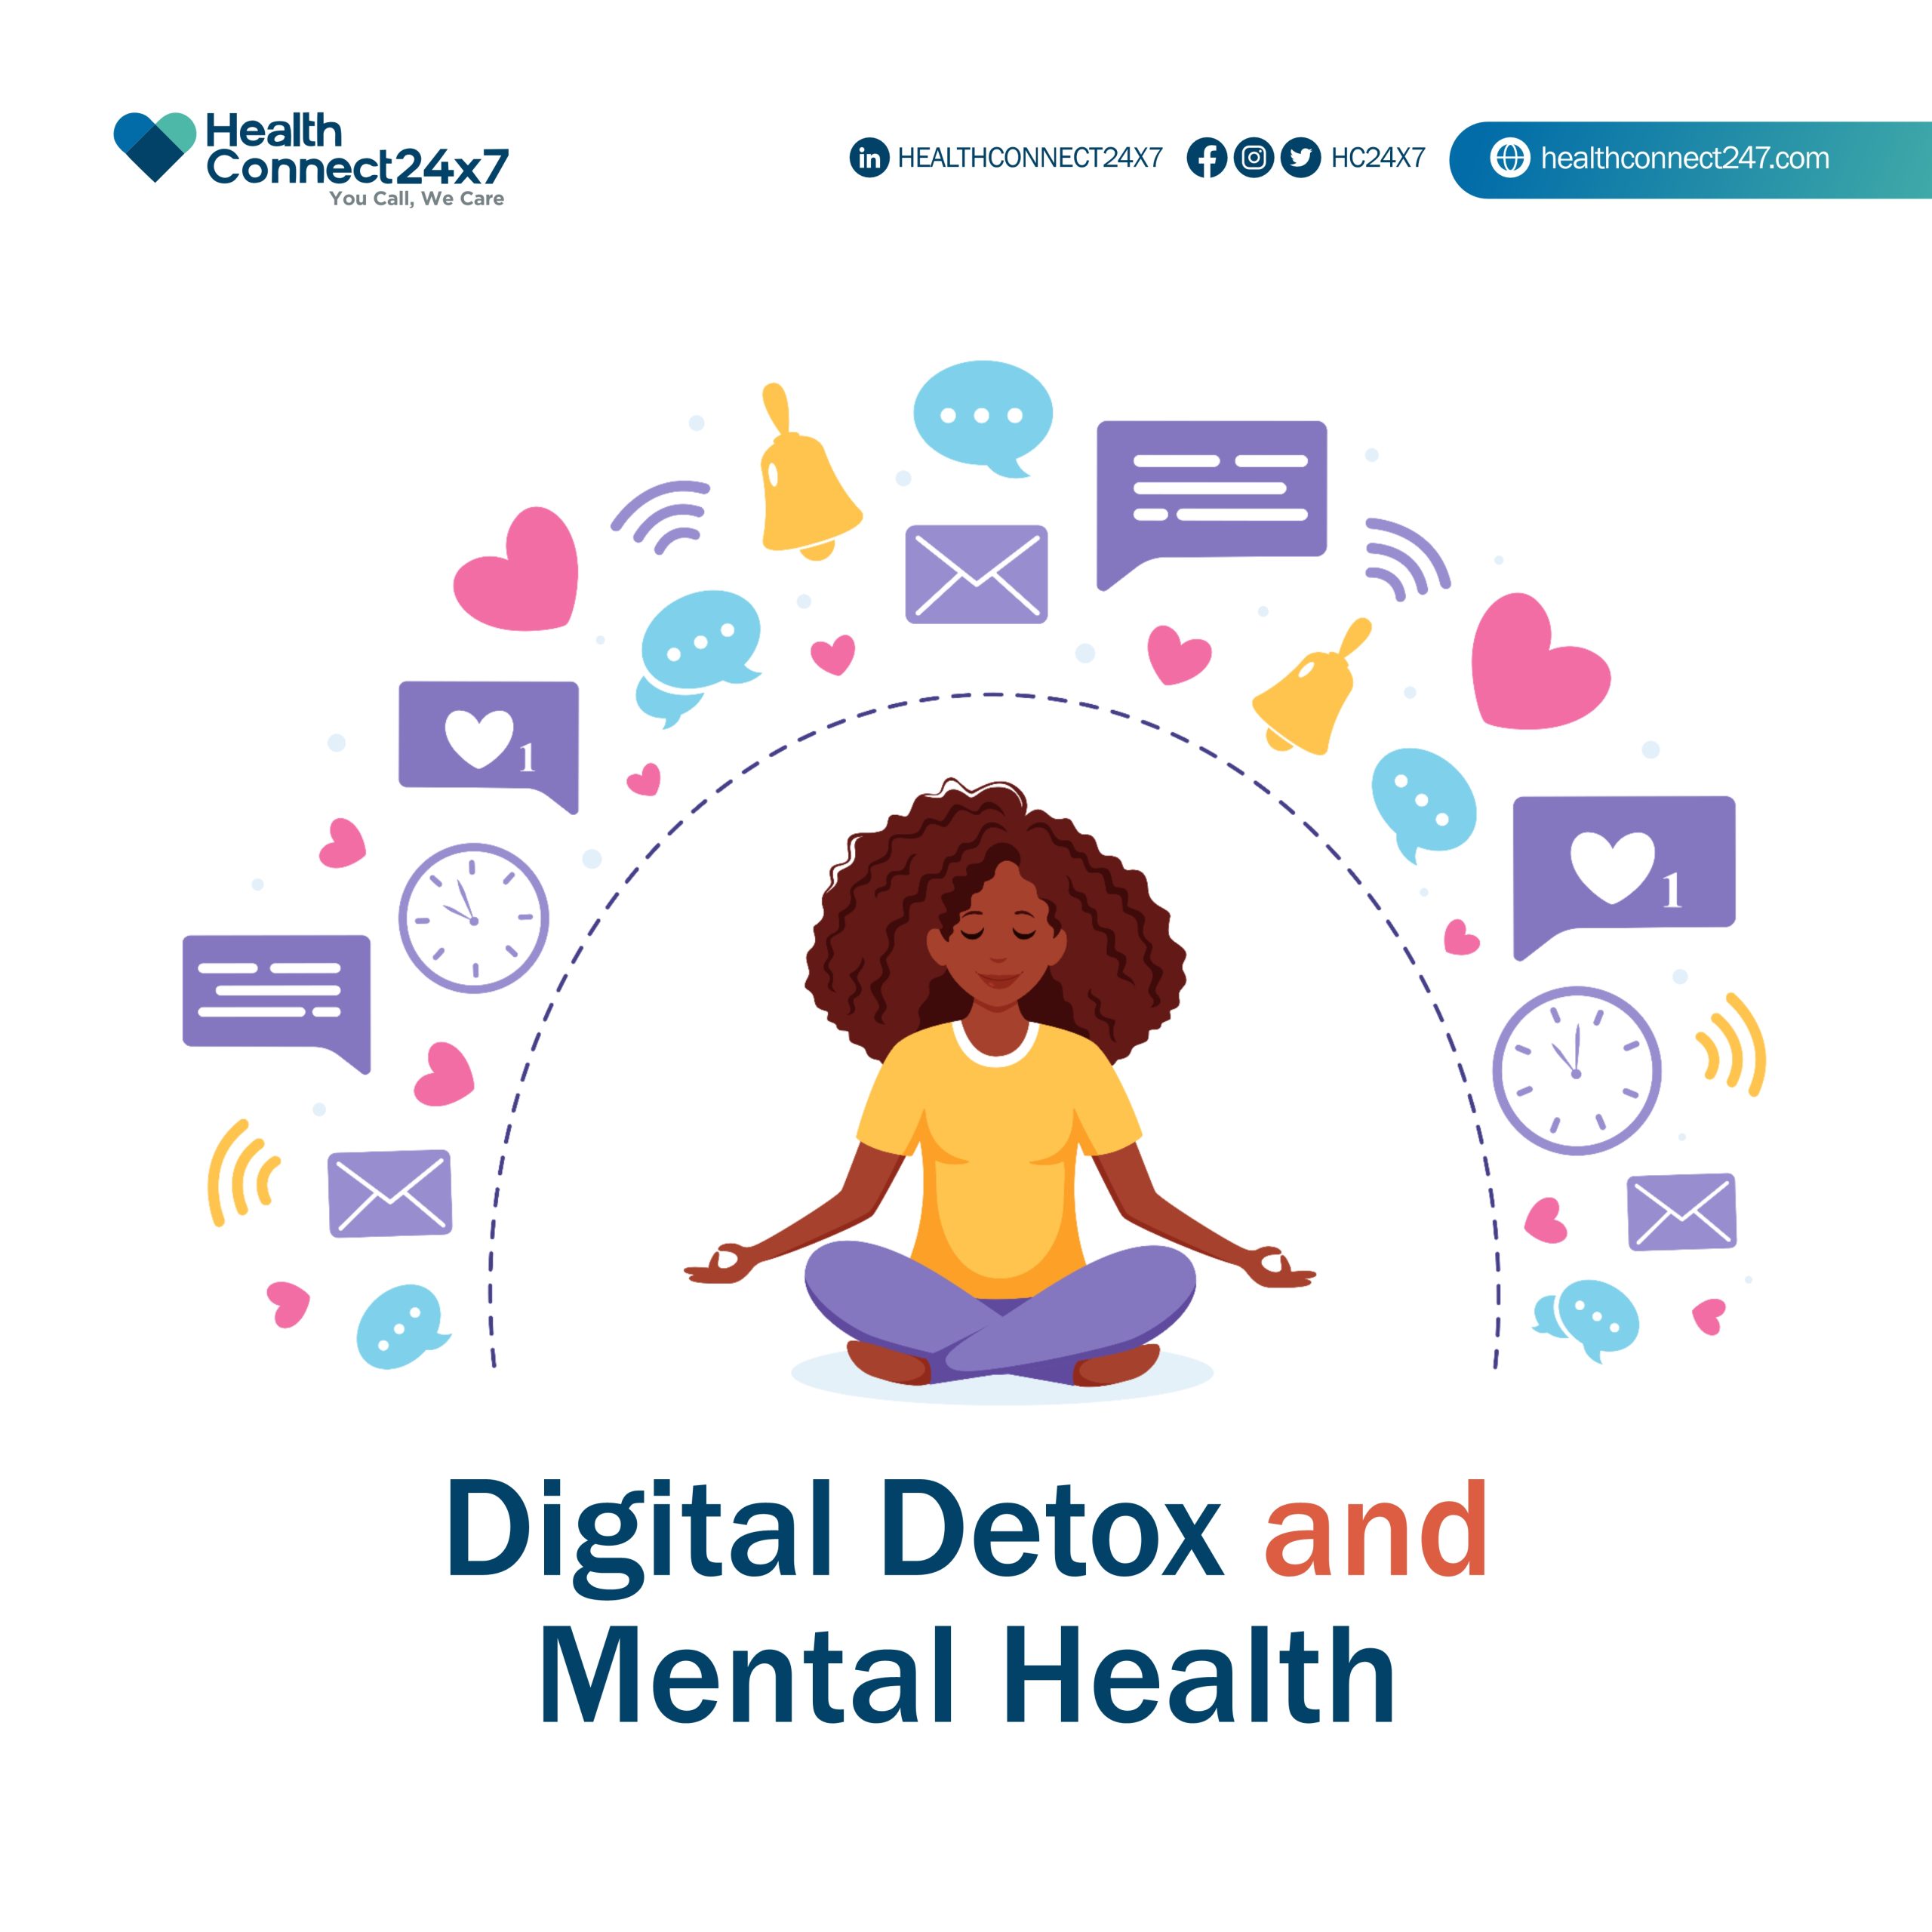 Digital detox and mental health